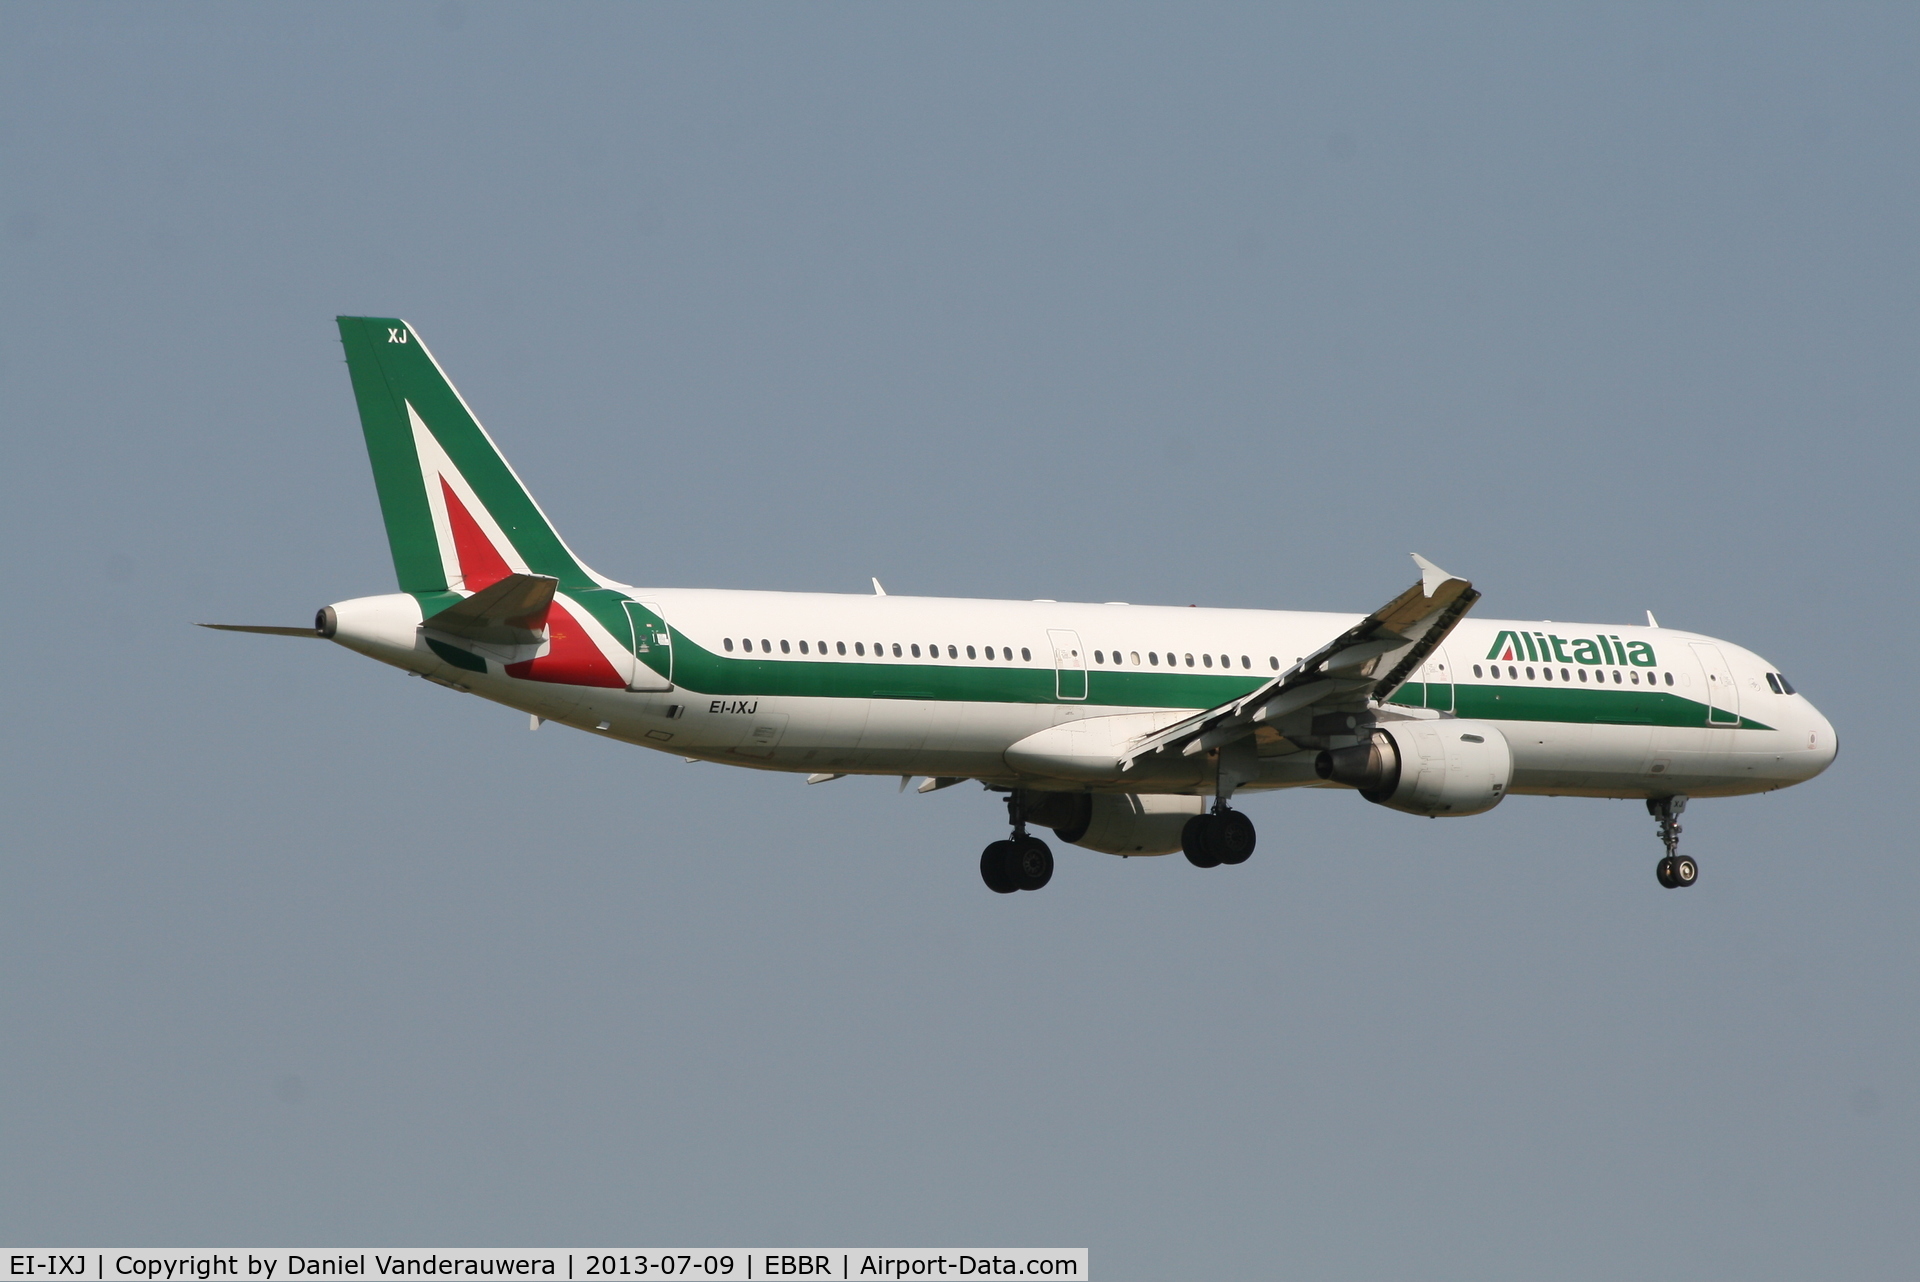 EI-IXJ, 1999 Airbus A321-112 C/N 959, Flight AZ156 is descending to RWY 02